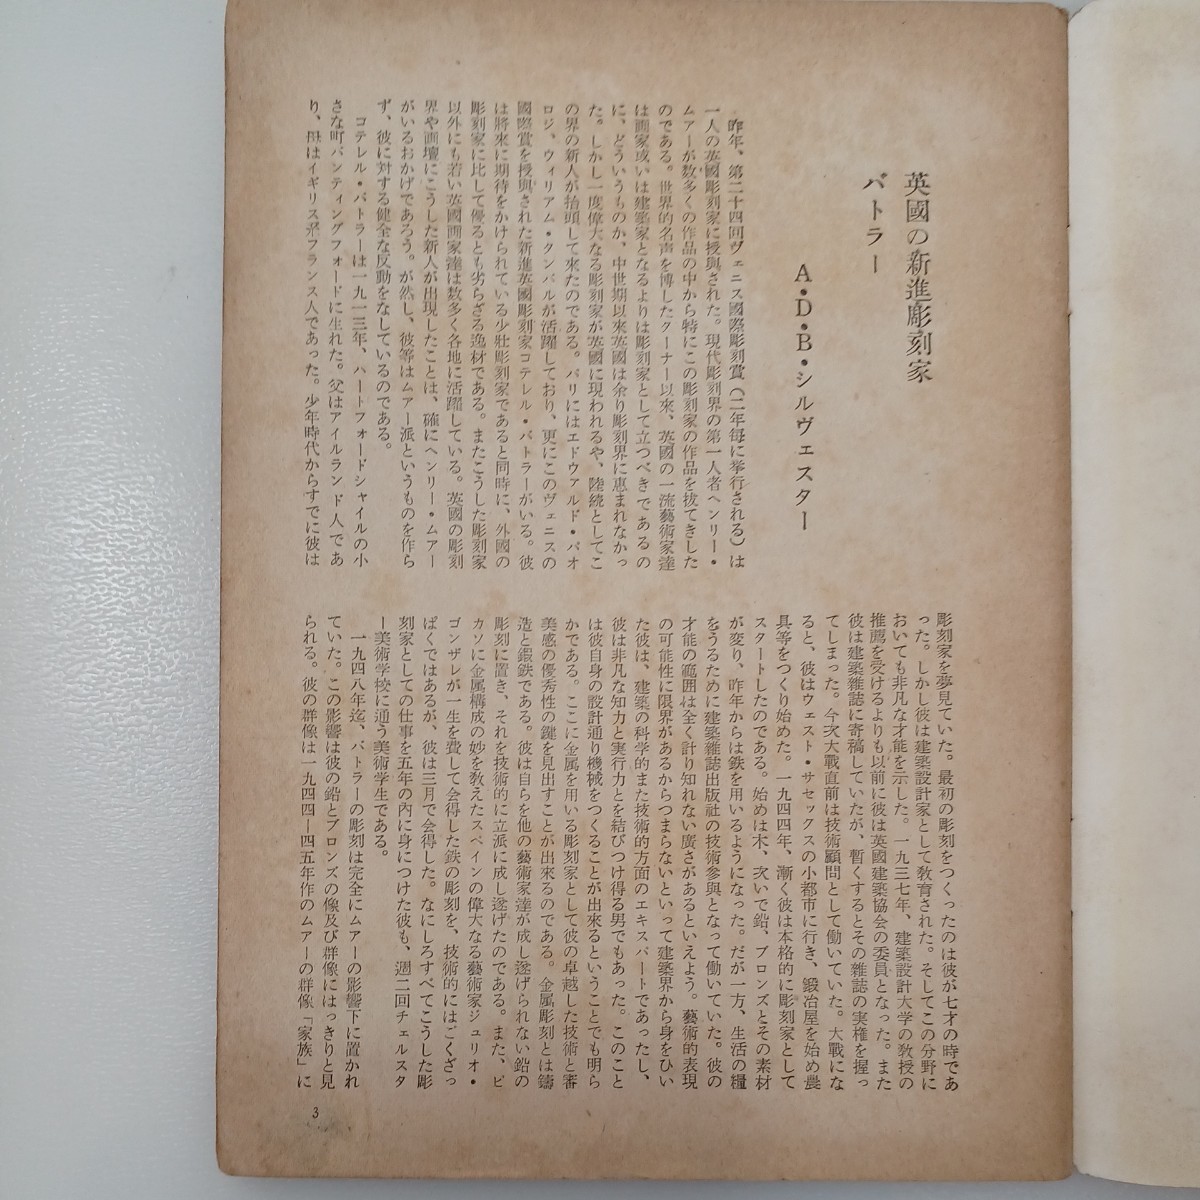 zaa-536♪ BT美術手帖 1950年2月号 Vol.2 No.26　オノレ・ドウミエ／林 武　他